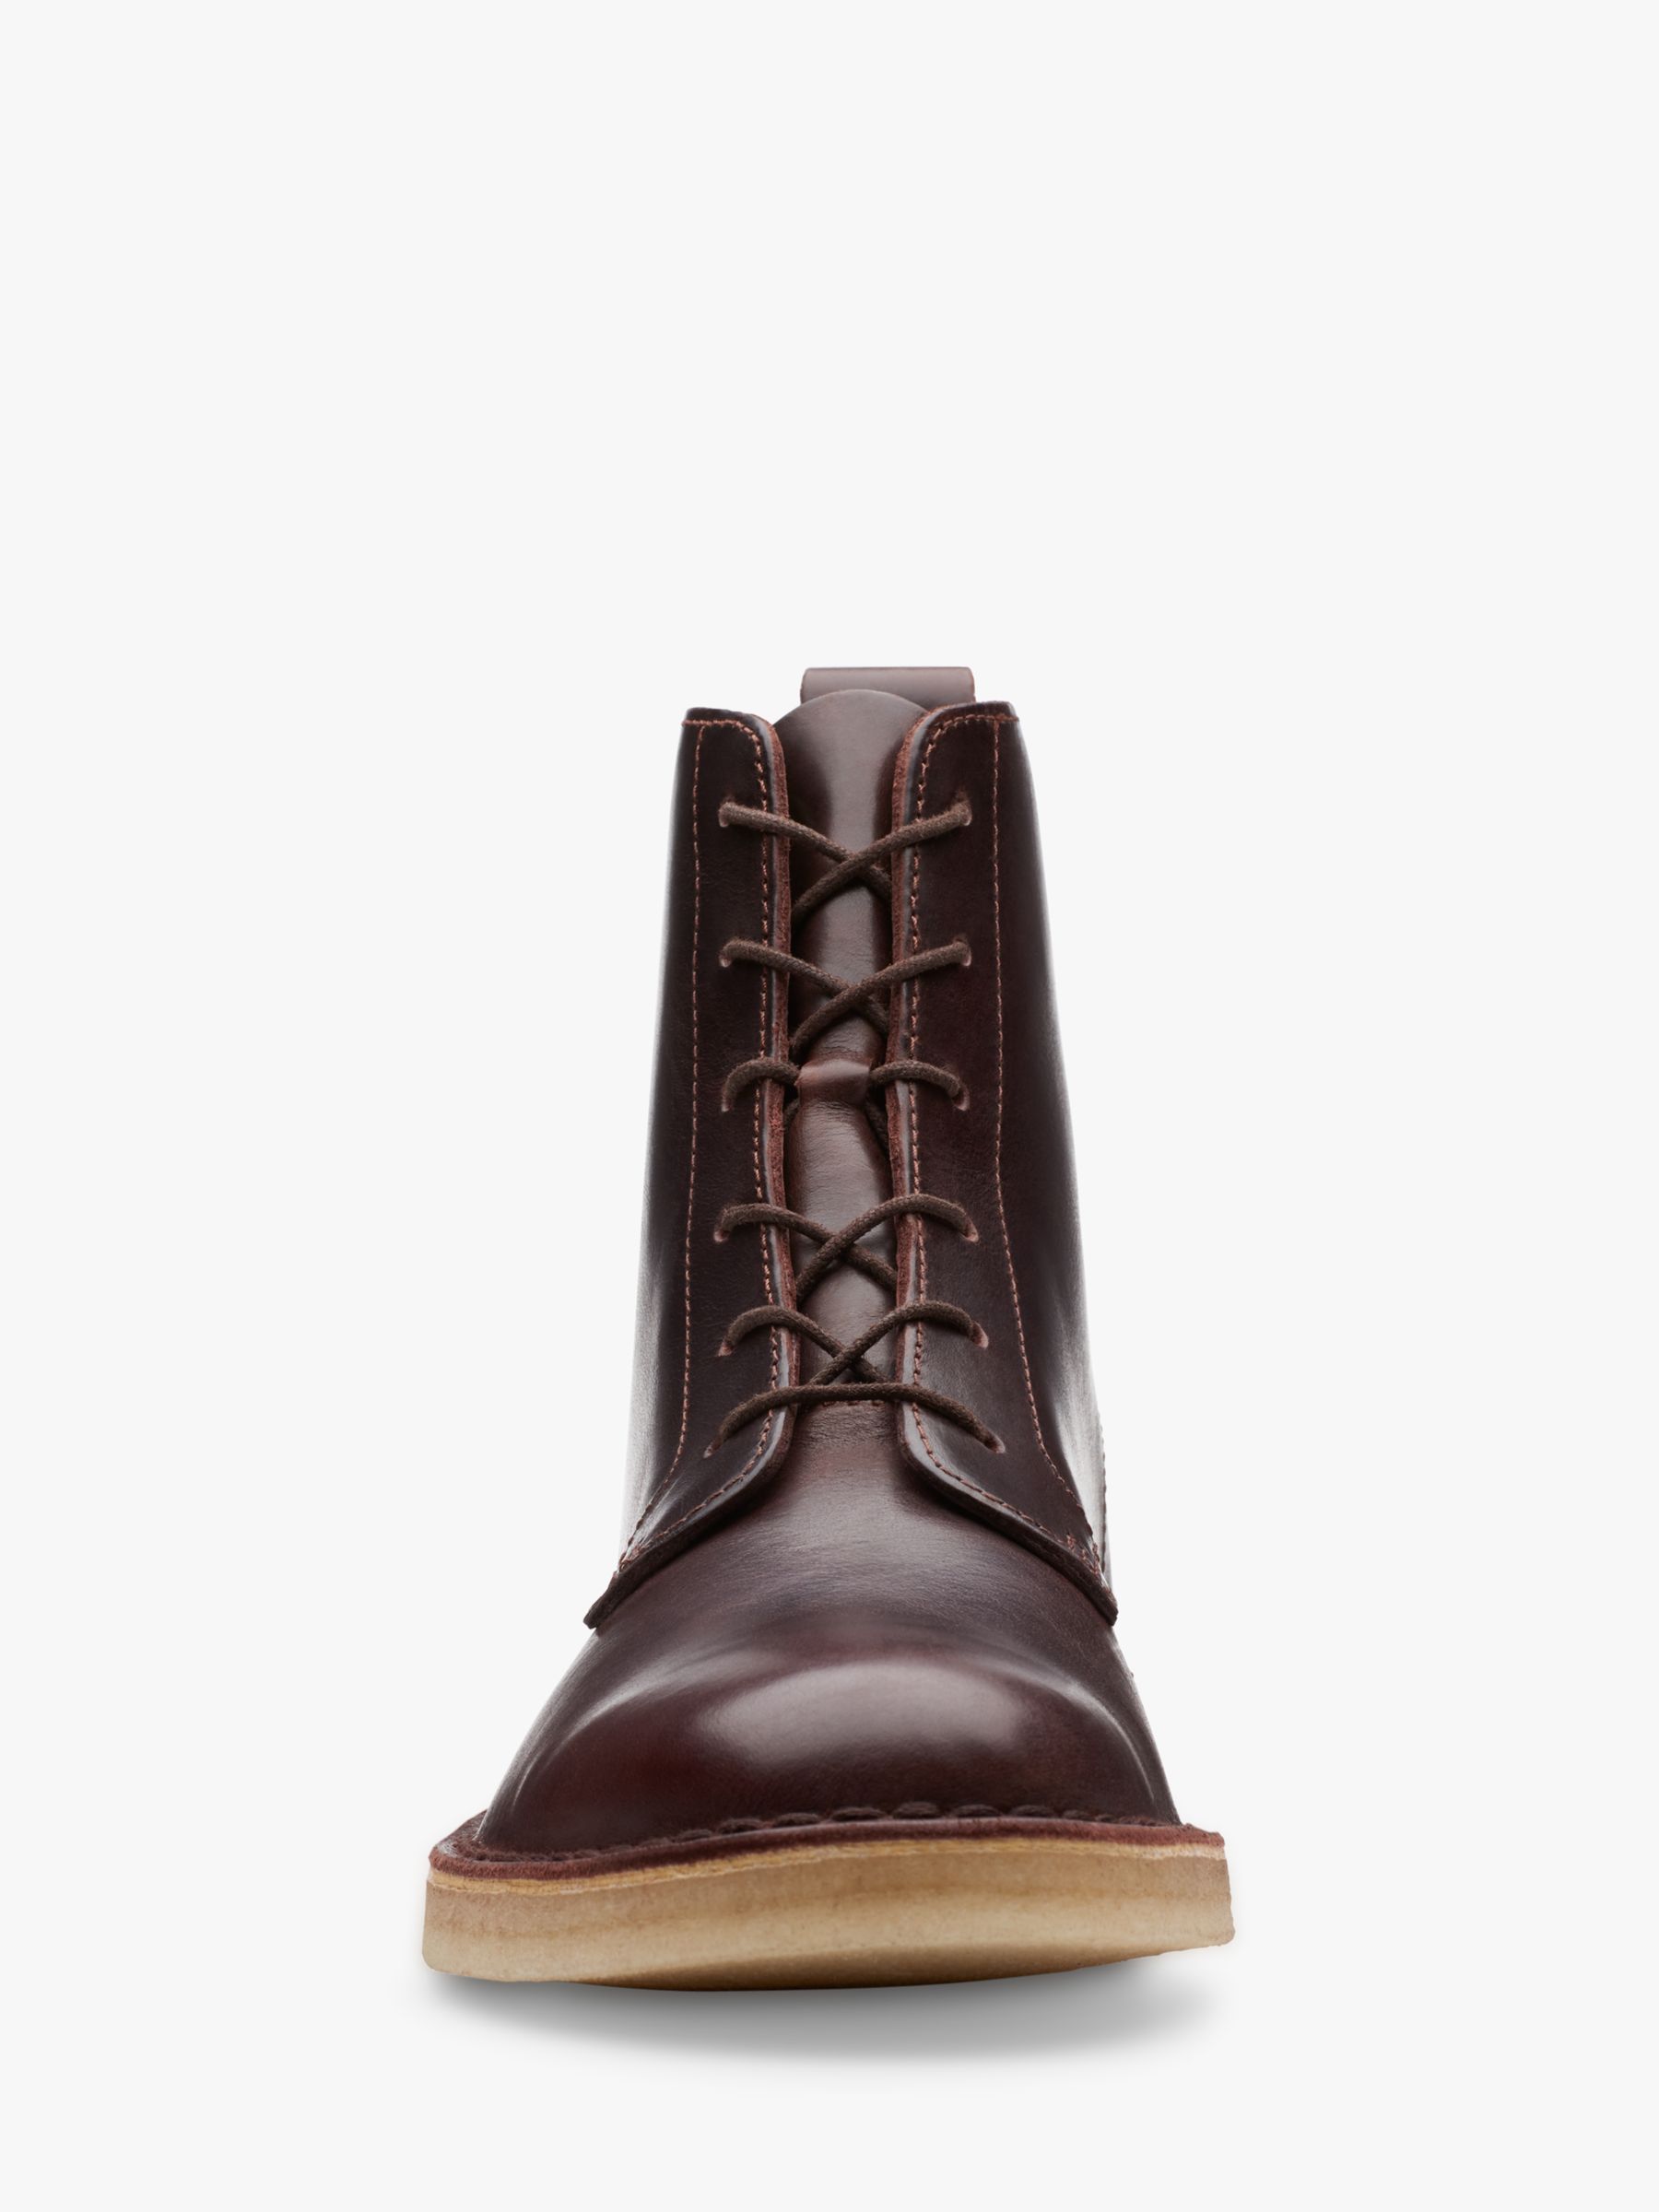 Clarks Originals Desert Mali Leather Boots, Chestnut at Lewis & Partners